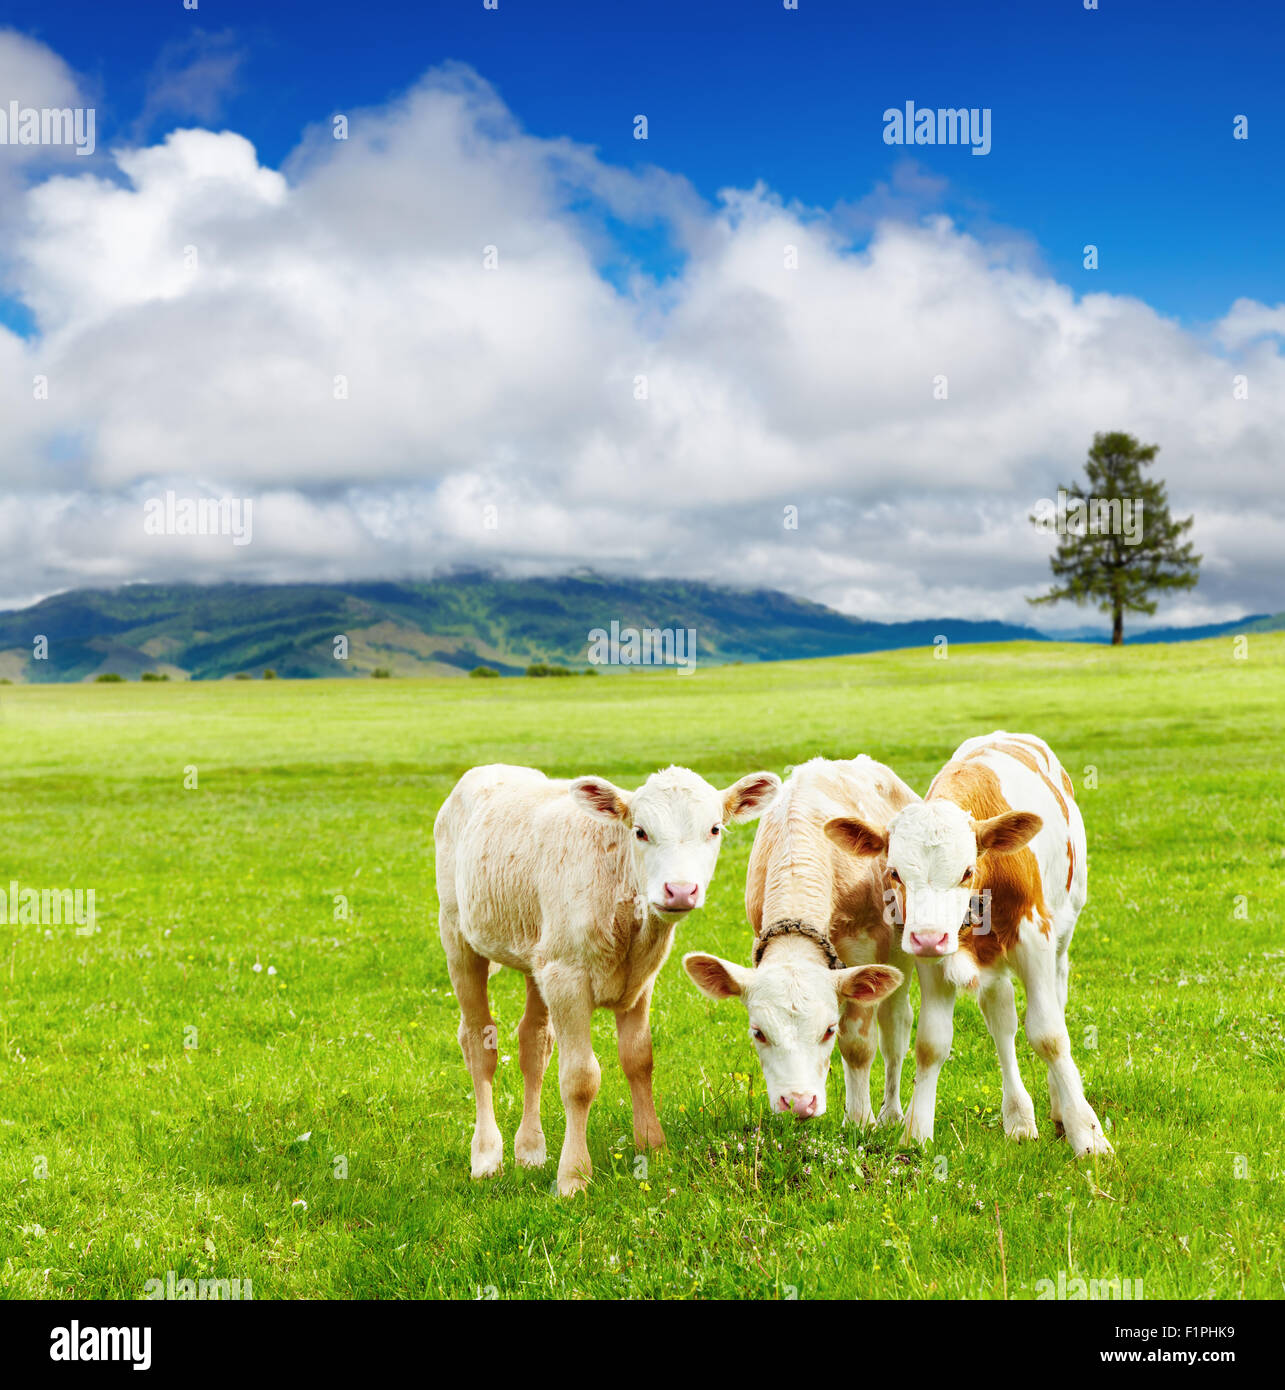 Three calves on the meadow Stock Photo